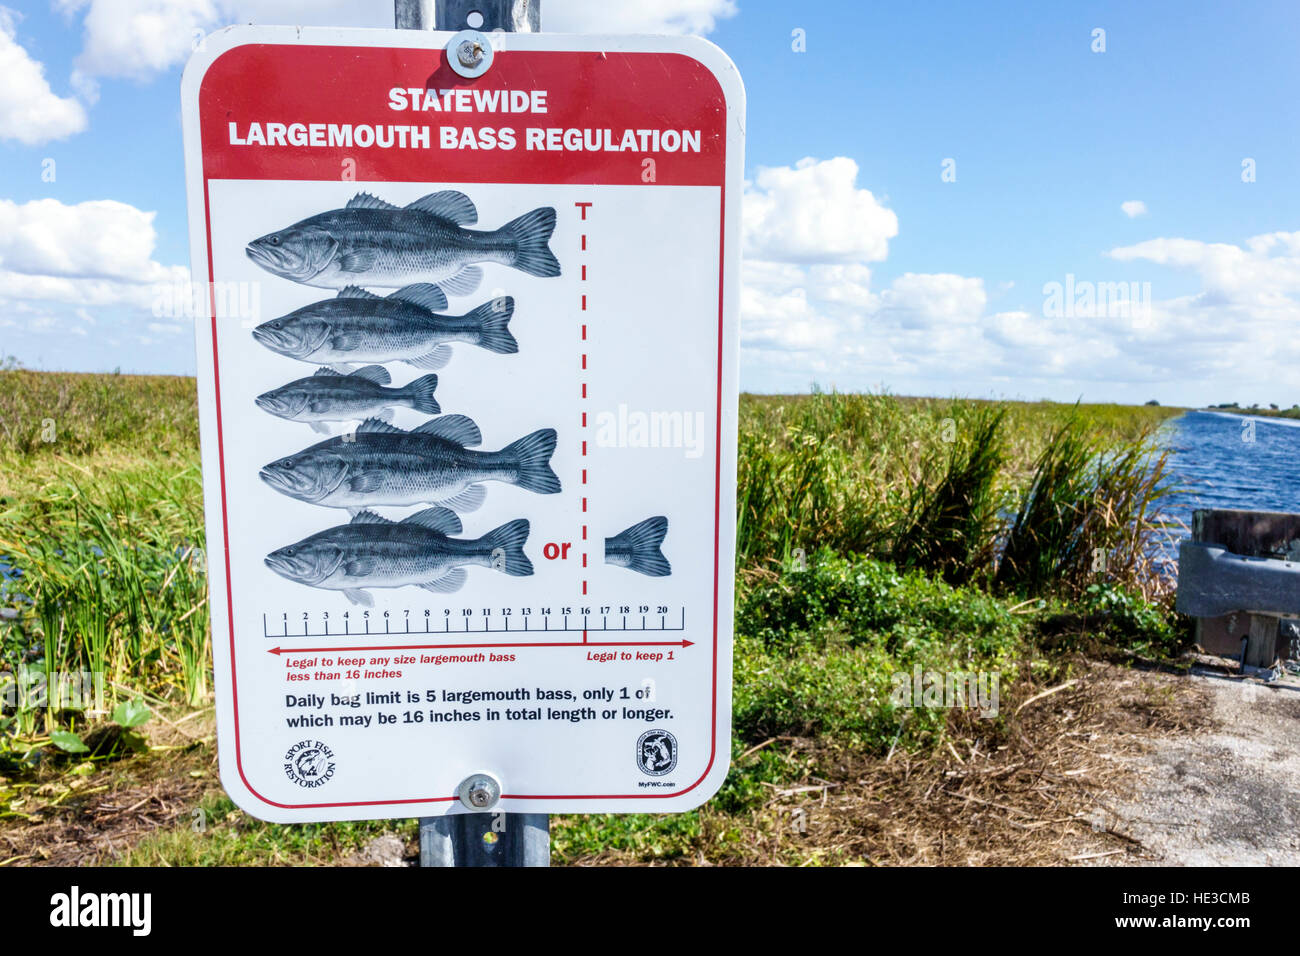 Florida Everglades, Alligator Alley, cartello, pesca, regolazione del basso di largemouth, Limit, Francis S. Taylor Wildlife Management Area, FL161125057 Foto Stock